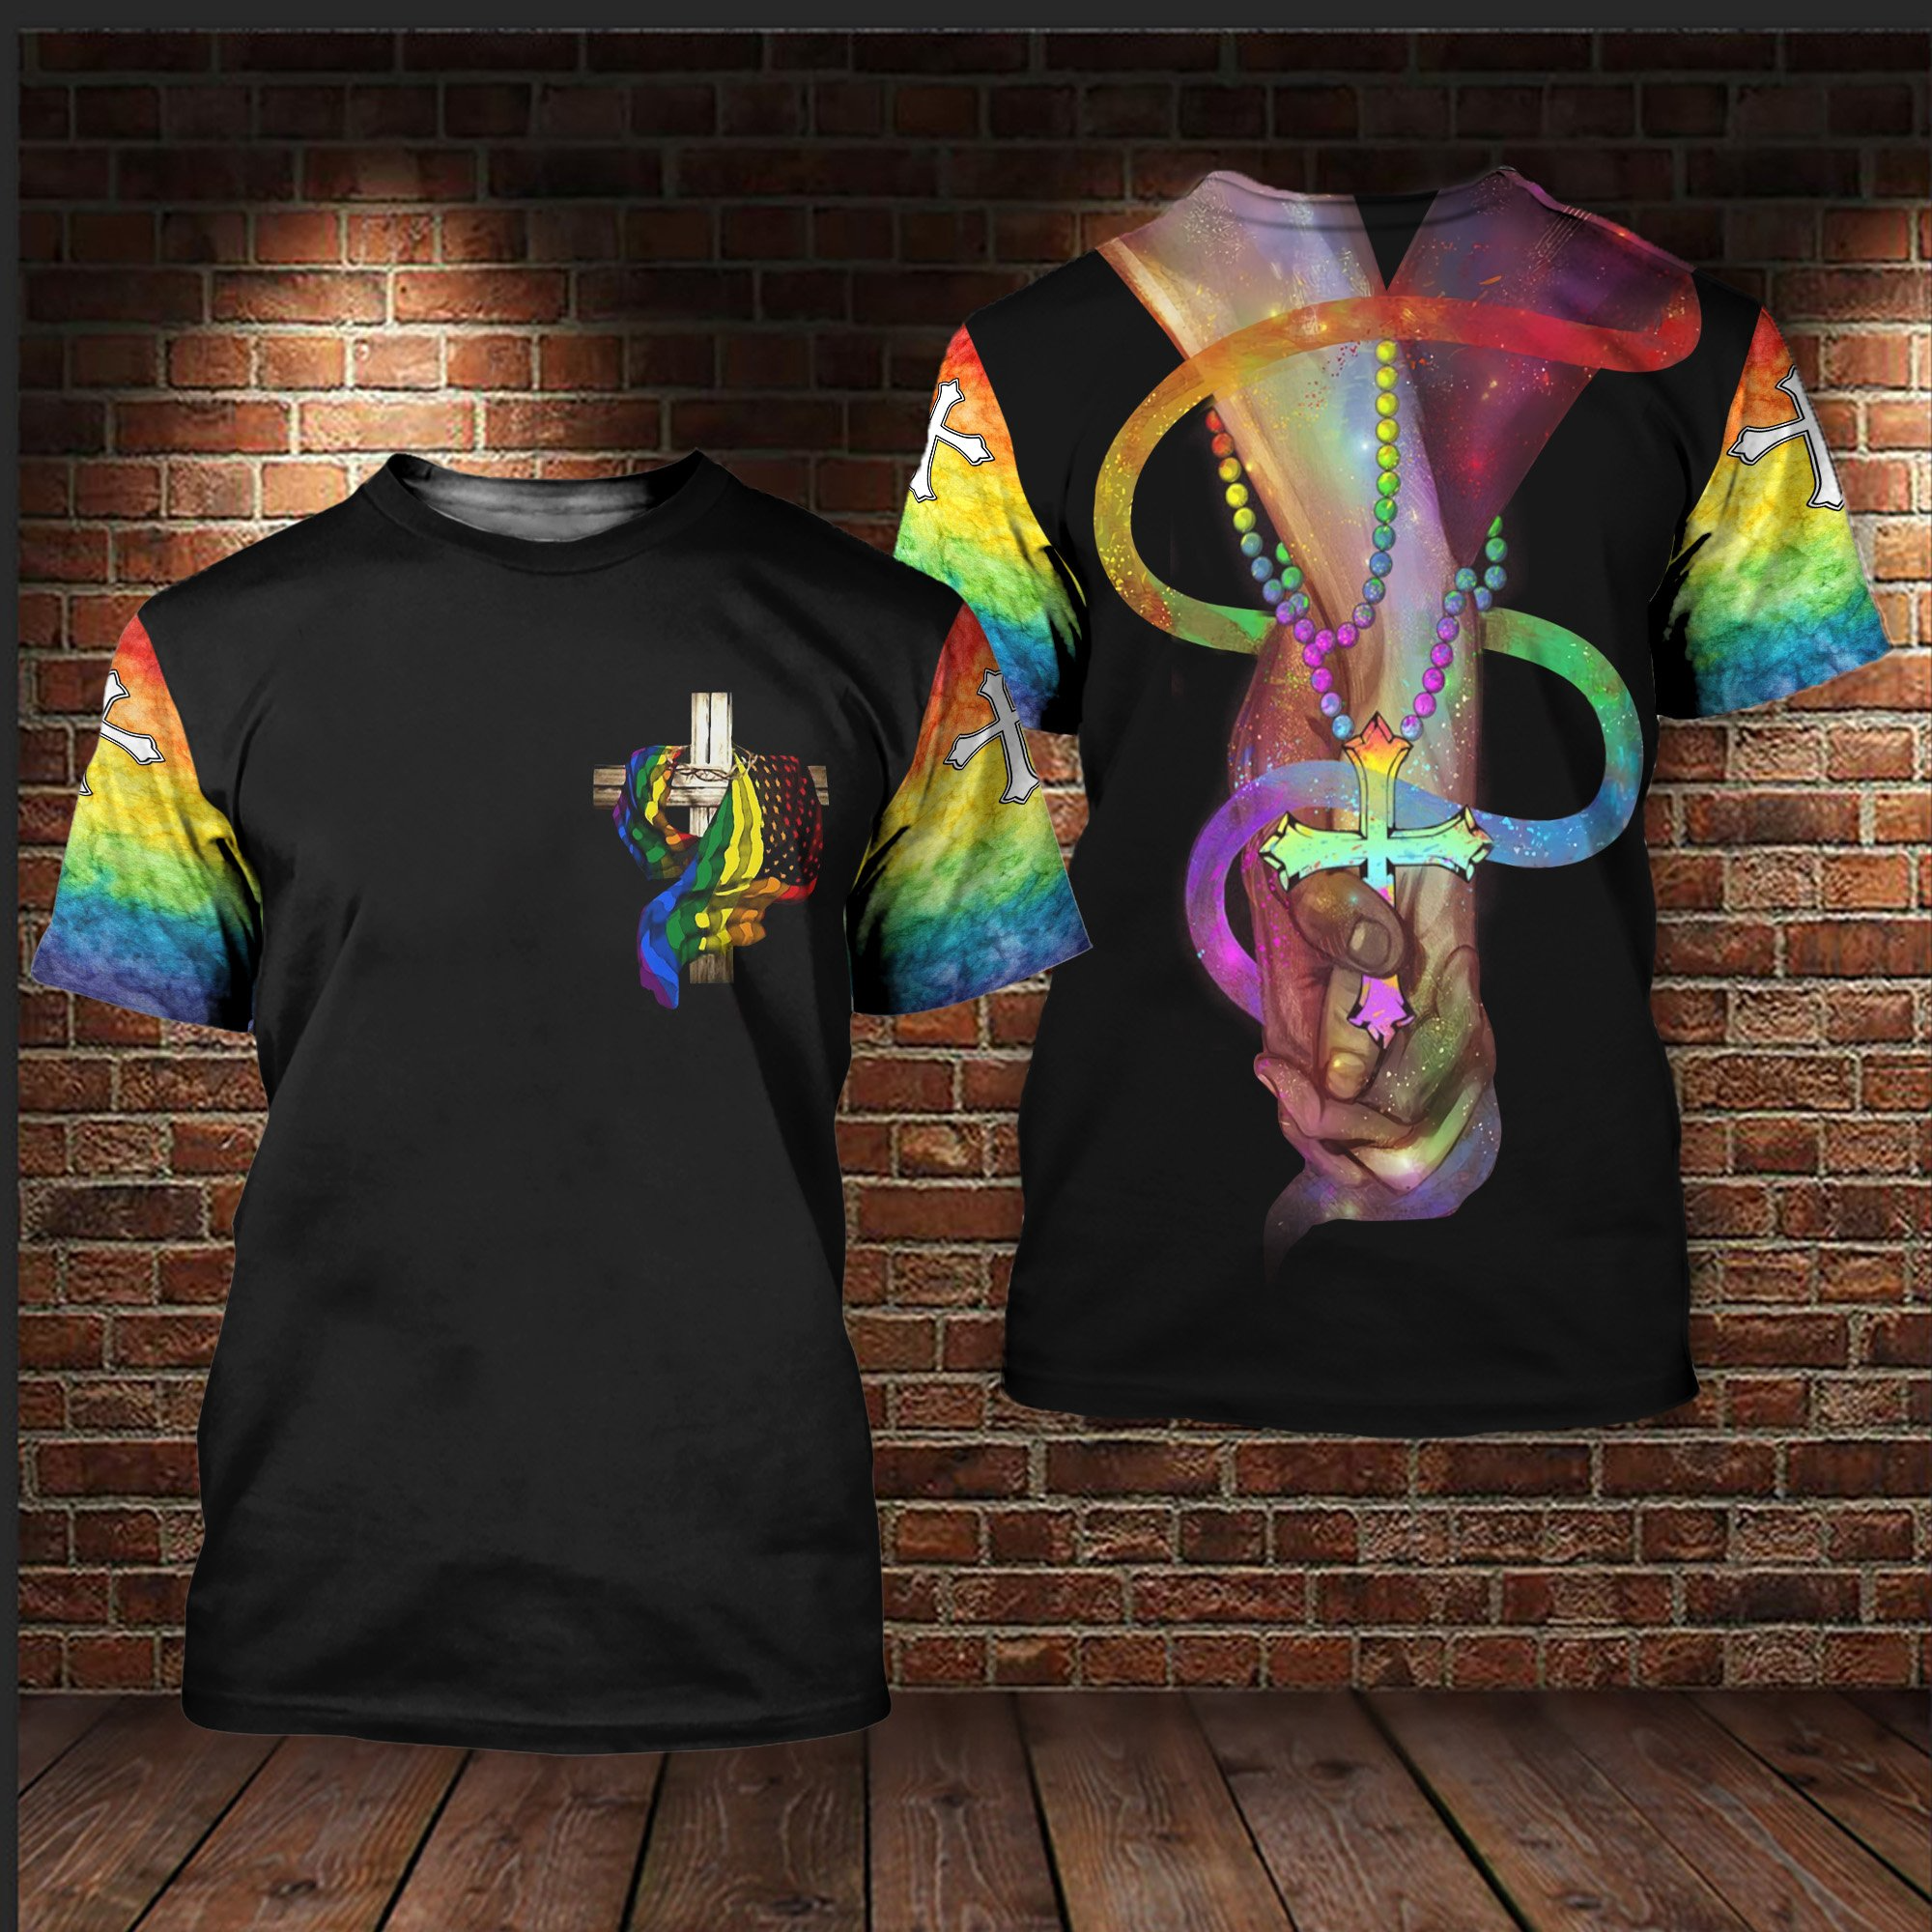 Coupld Gay Men T Shirt/ LGBT God Loves Everyone Shirts For LGBT Community. Gift For Gay Man